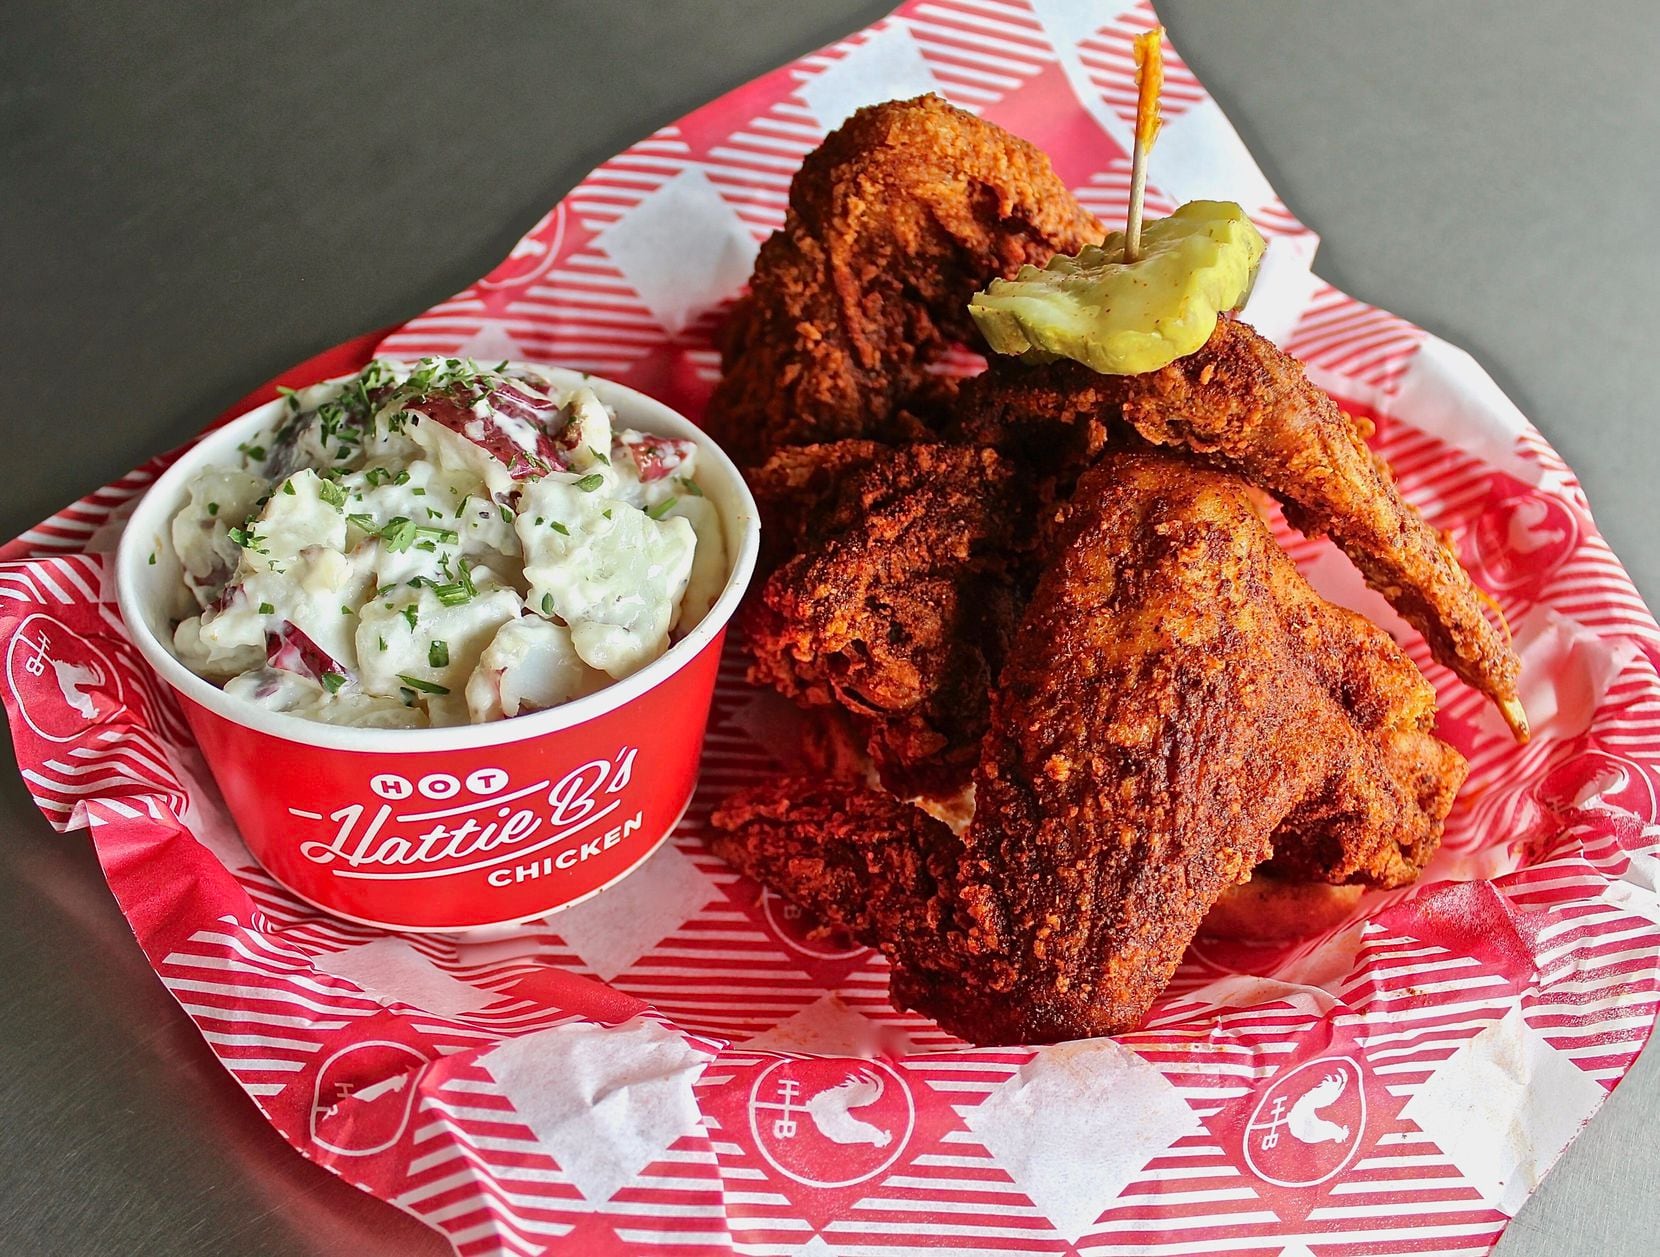 Mark our words: People will wait in line for Hattie B's hot chicken when it opens in Dallas.